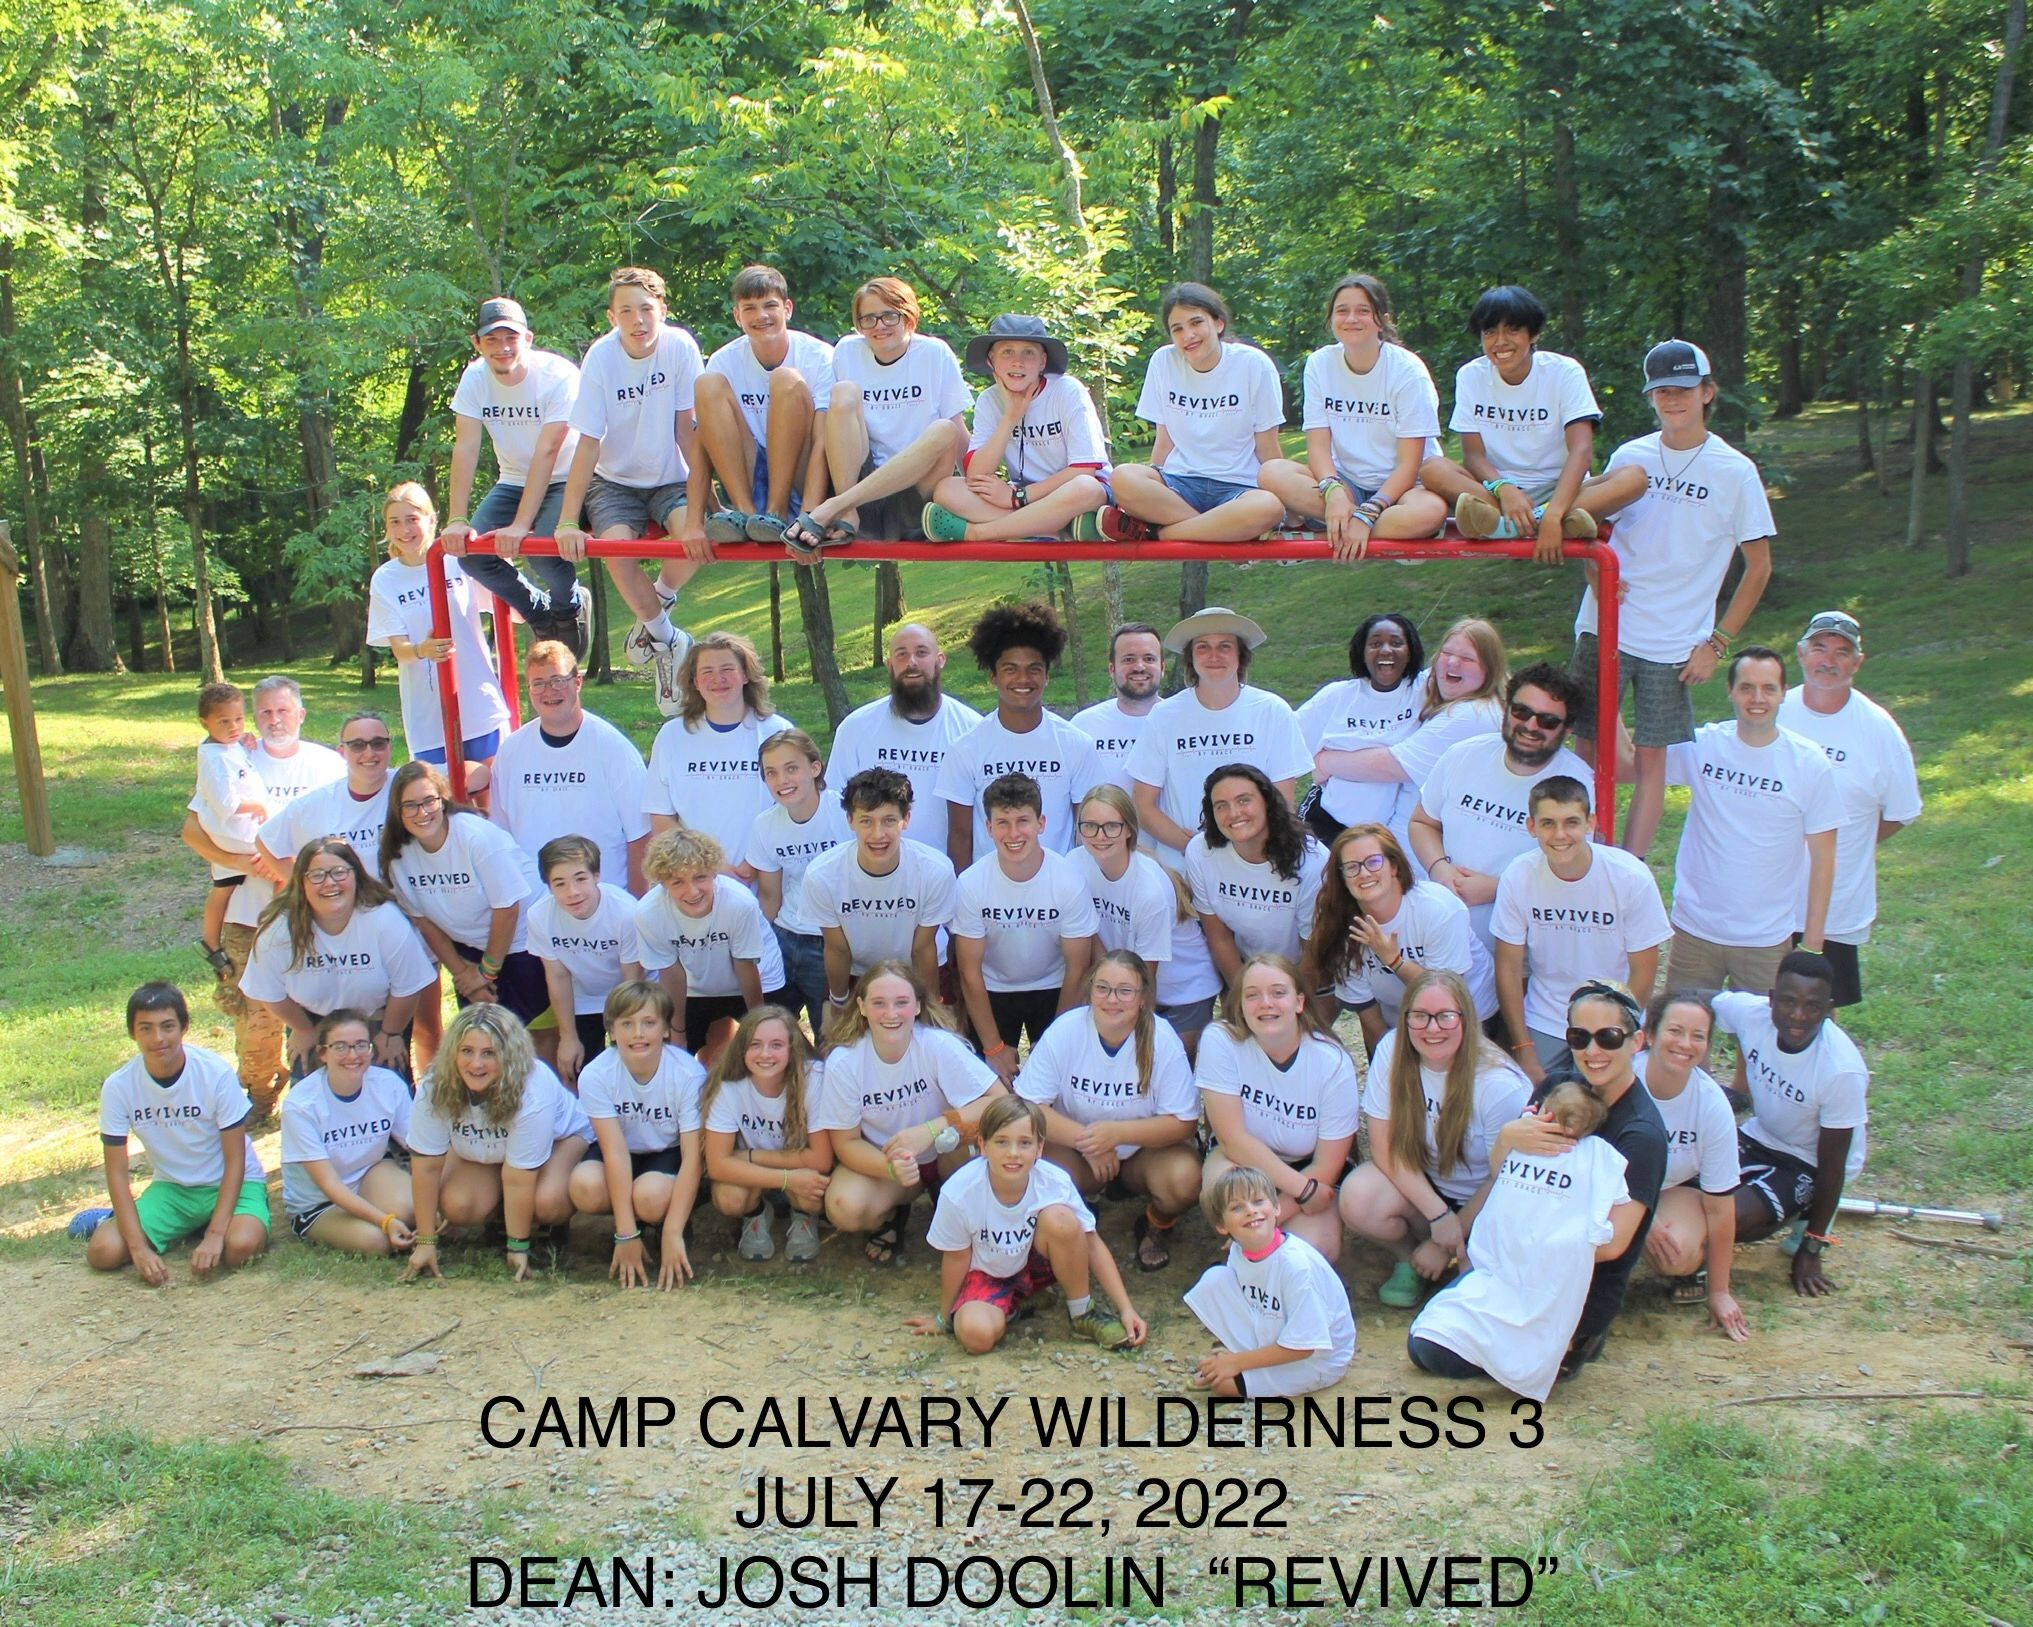 Camp Calvary Summer Programs for Kids, Summer Camp, Christian